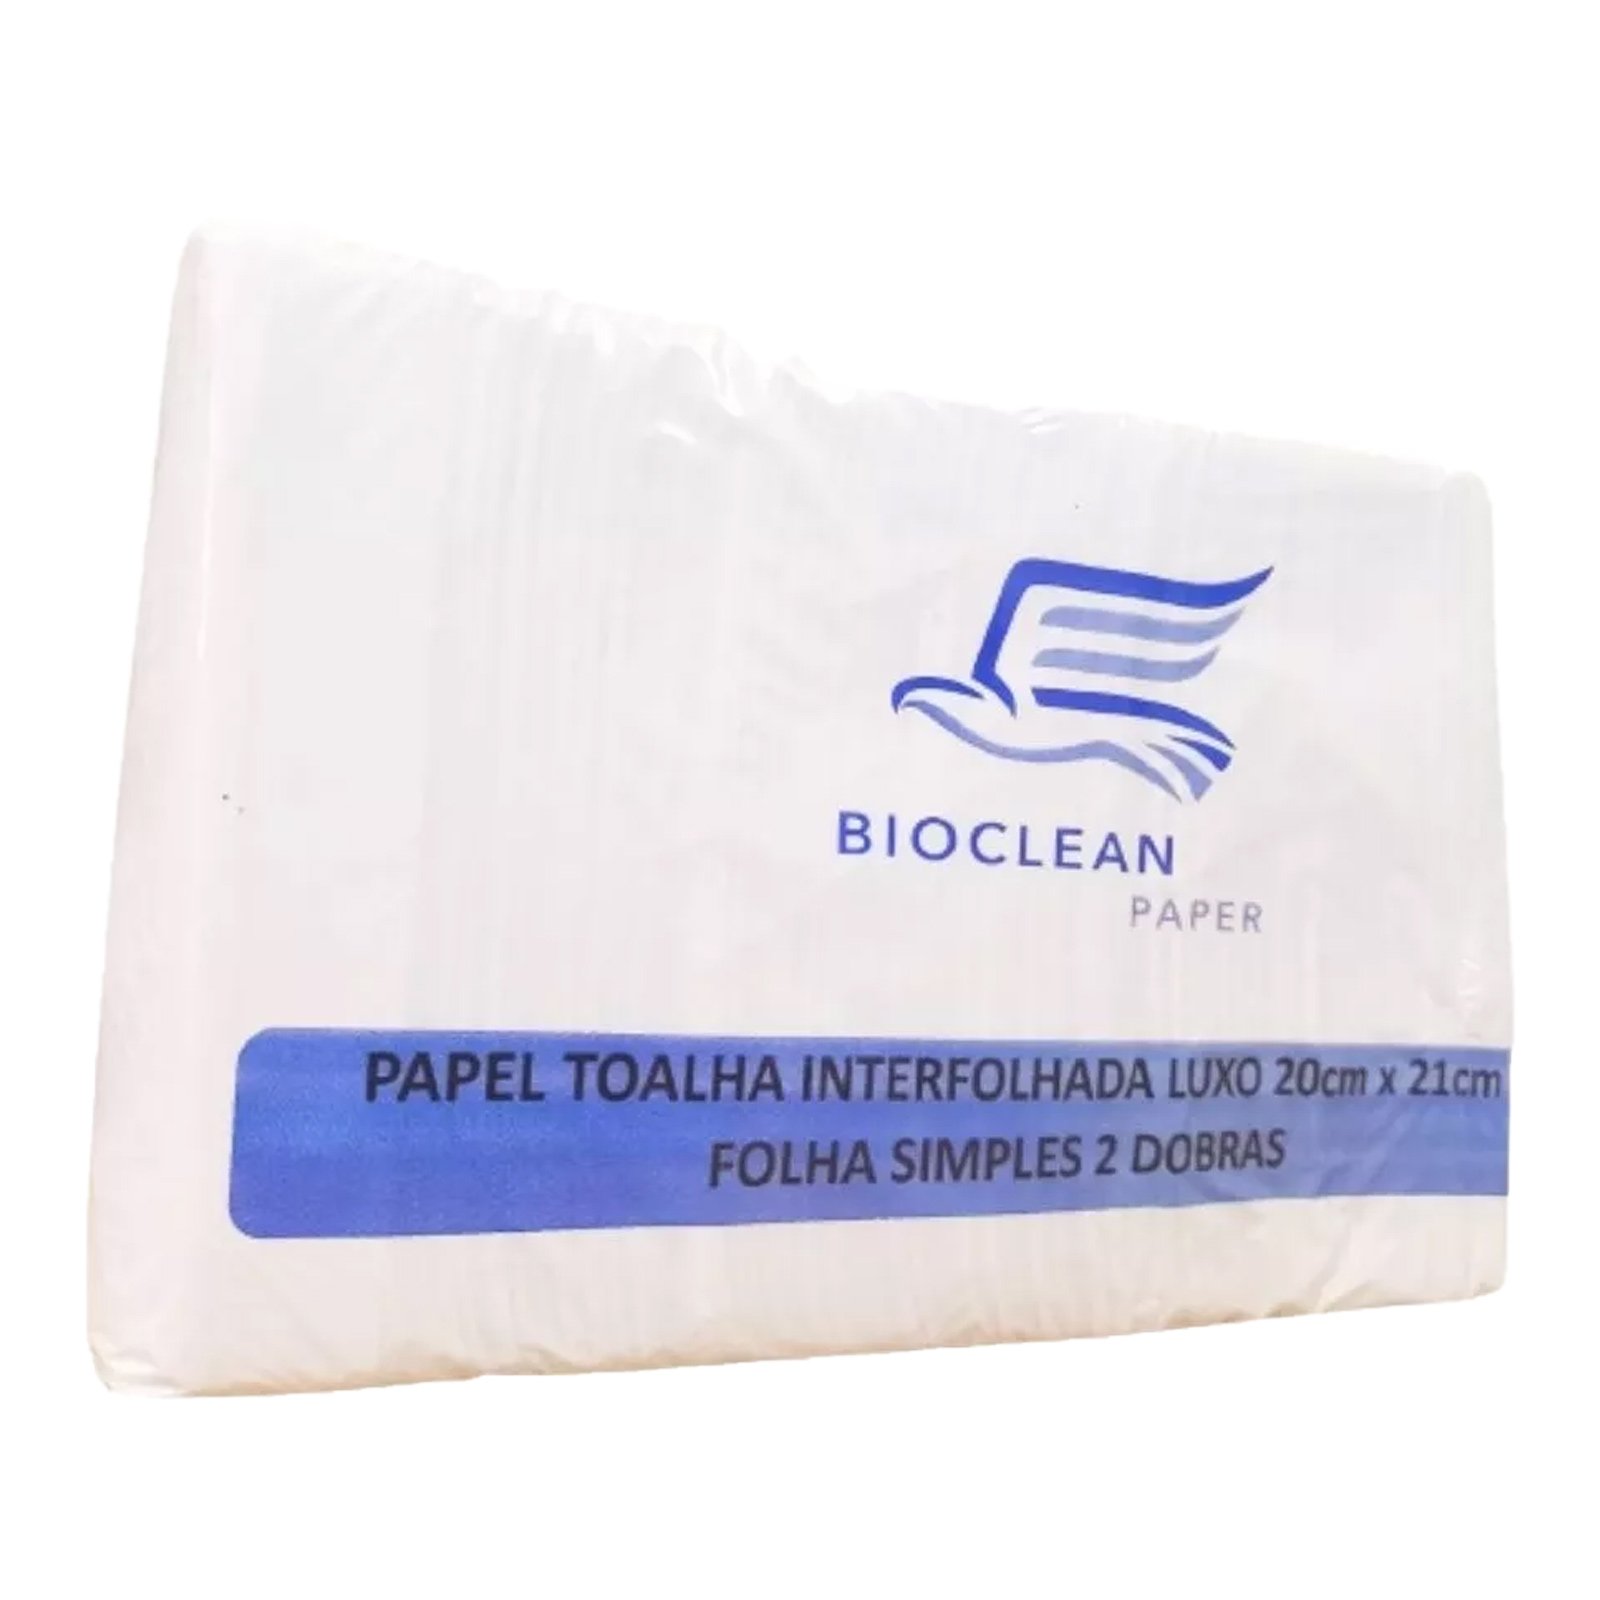 5 Pacotes Papel Toalha Interfolhado 20 X 21 Cm Pacote 1000 Folhas Bioclean Paper Luxo Branco - Kit 5 - 4